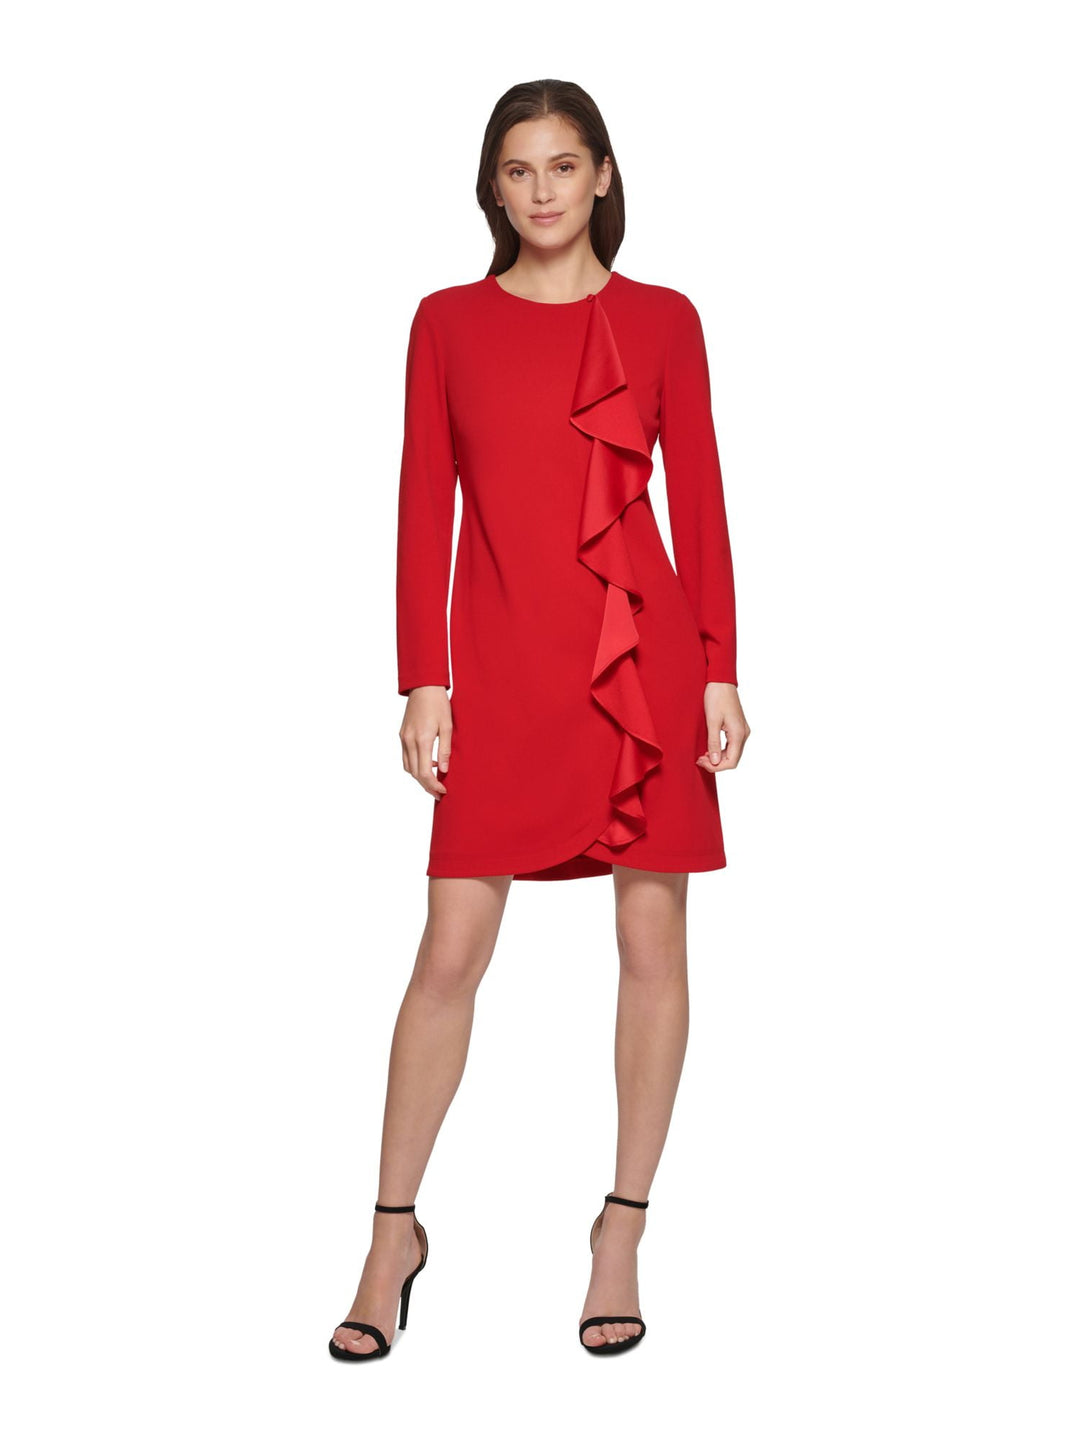 DKNY Women's Cascading Ruffle Long Sleeve Dress Red Size 2